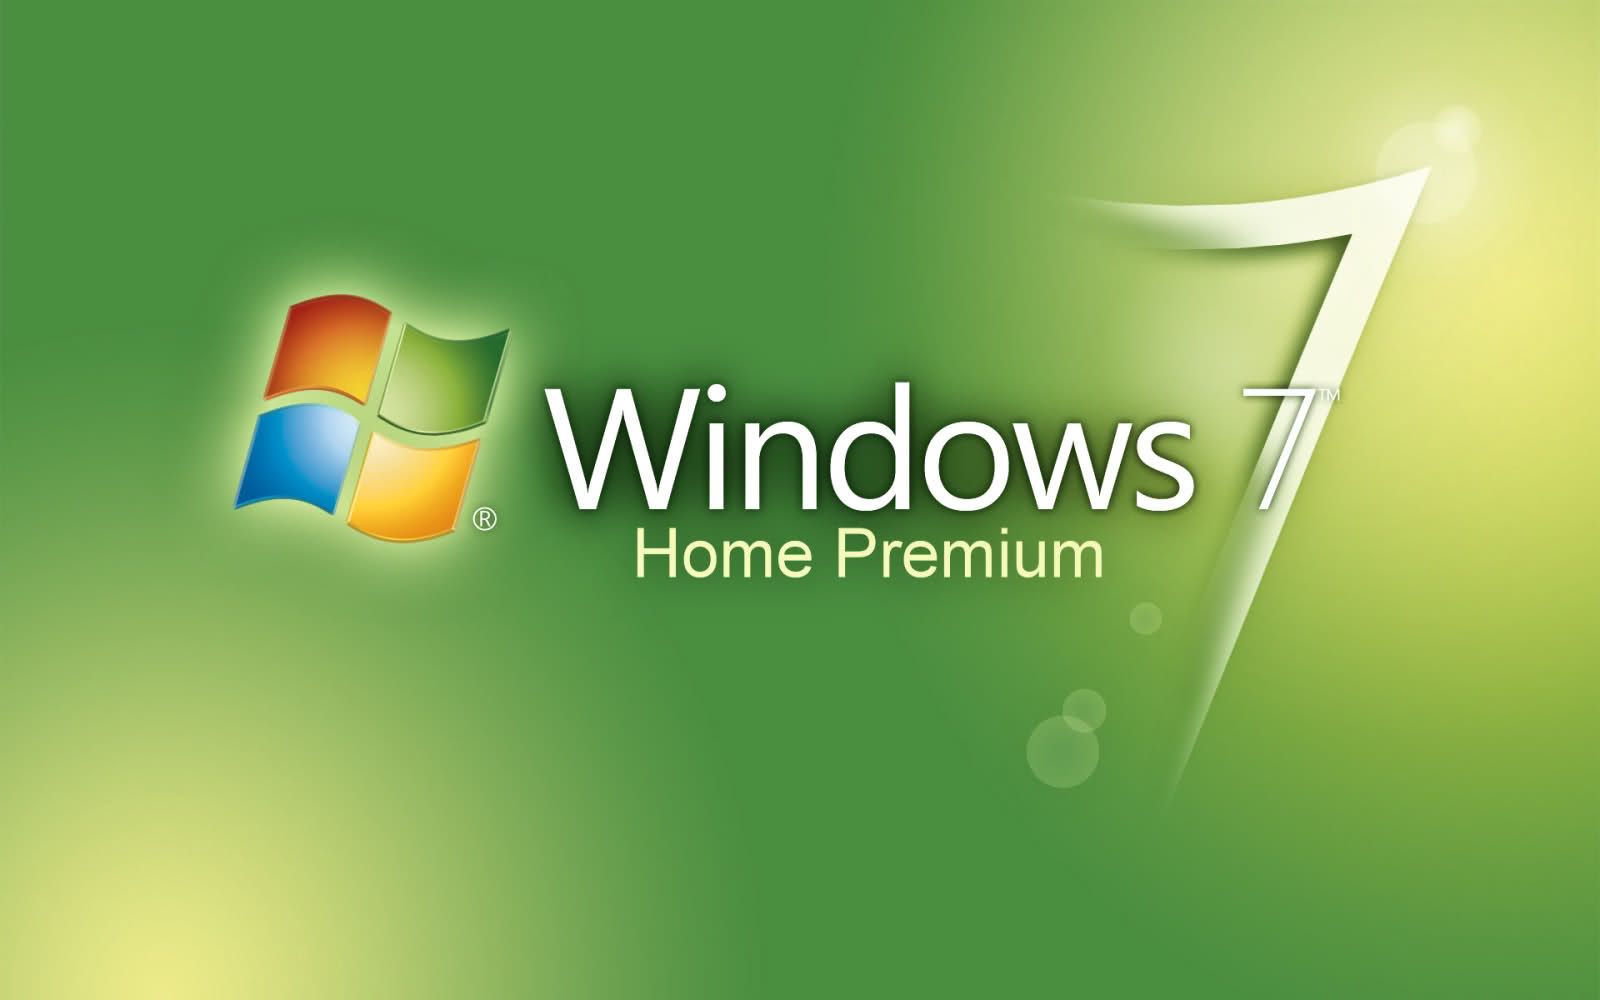 Windows Home Premium Wallpaper